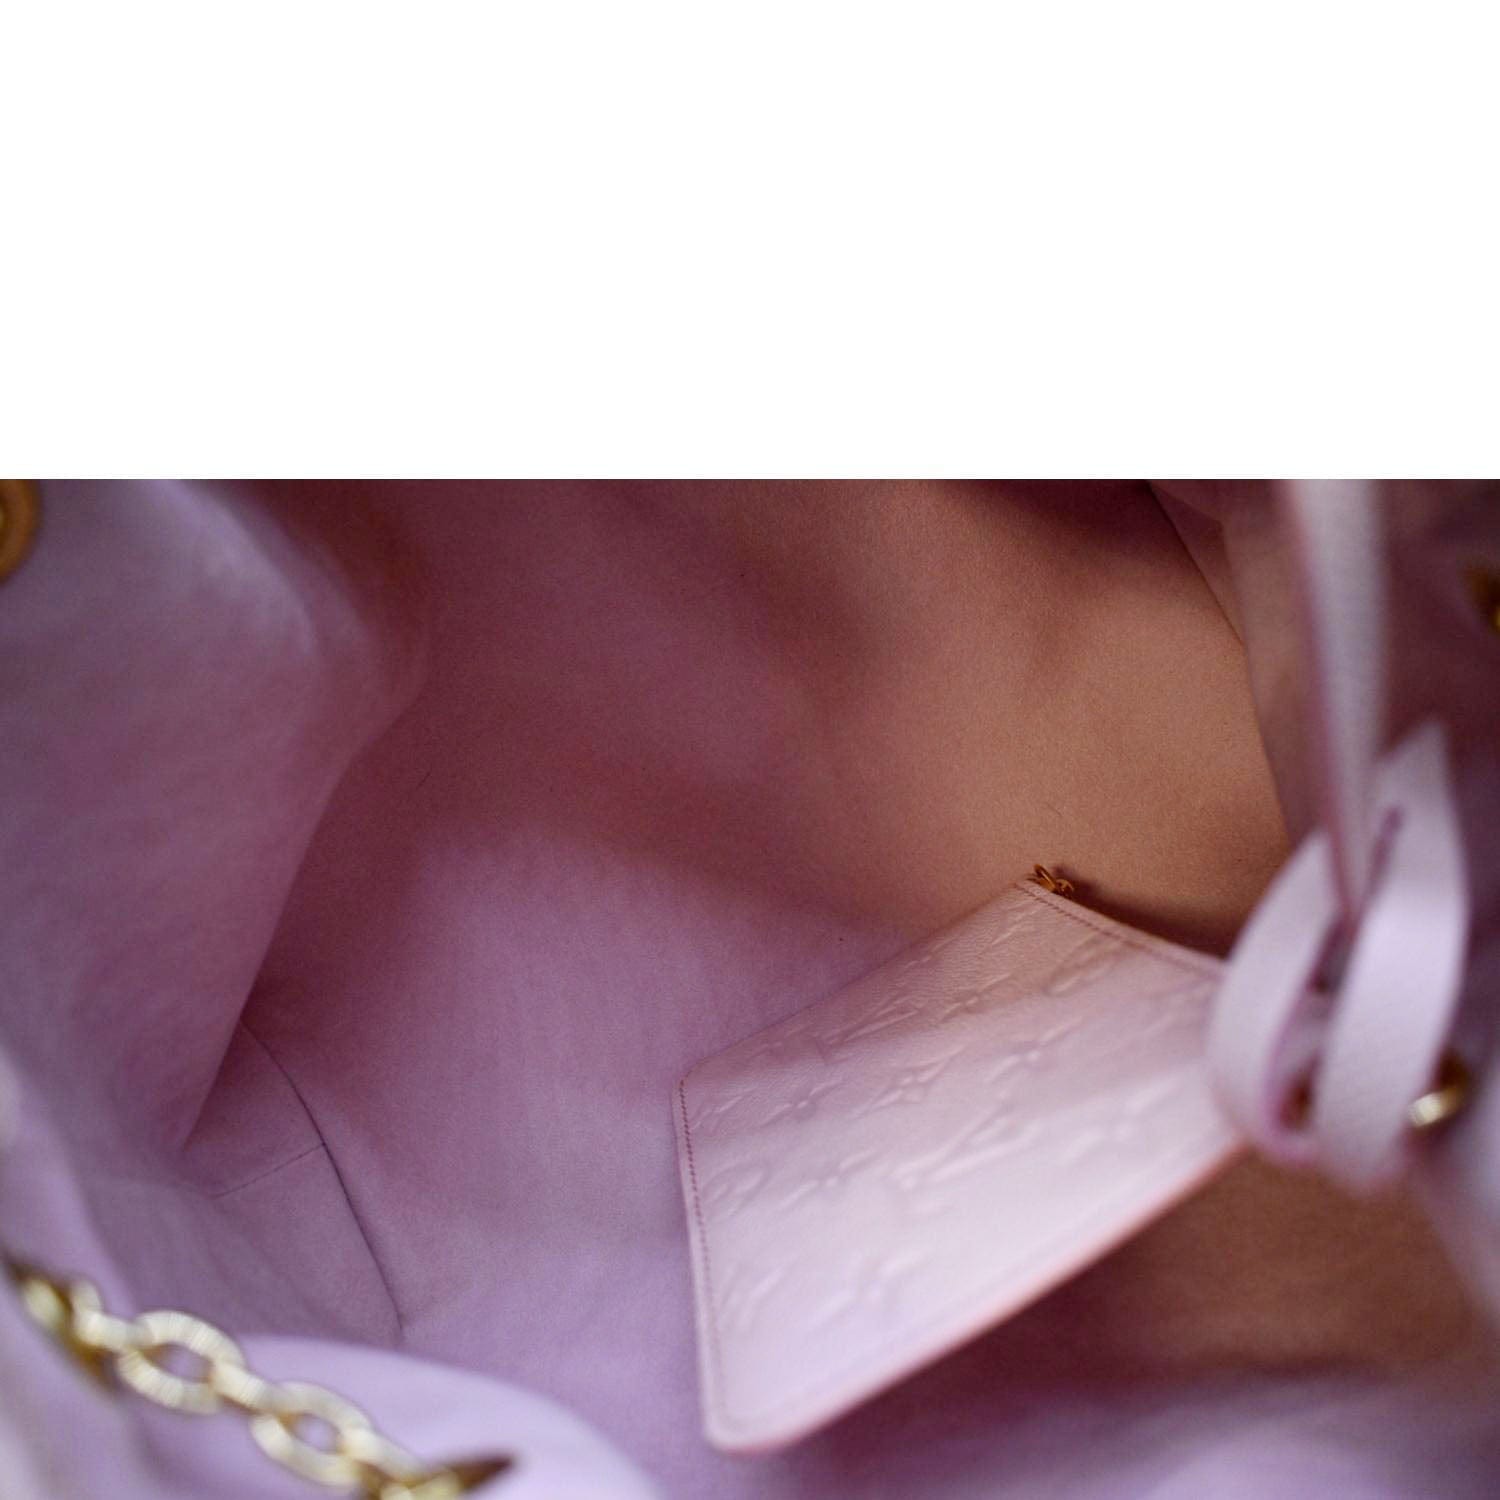 Summer Bundle Bag - Luxury Monogram Empreinte Leather Pink